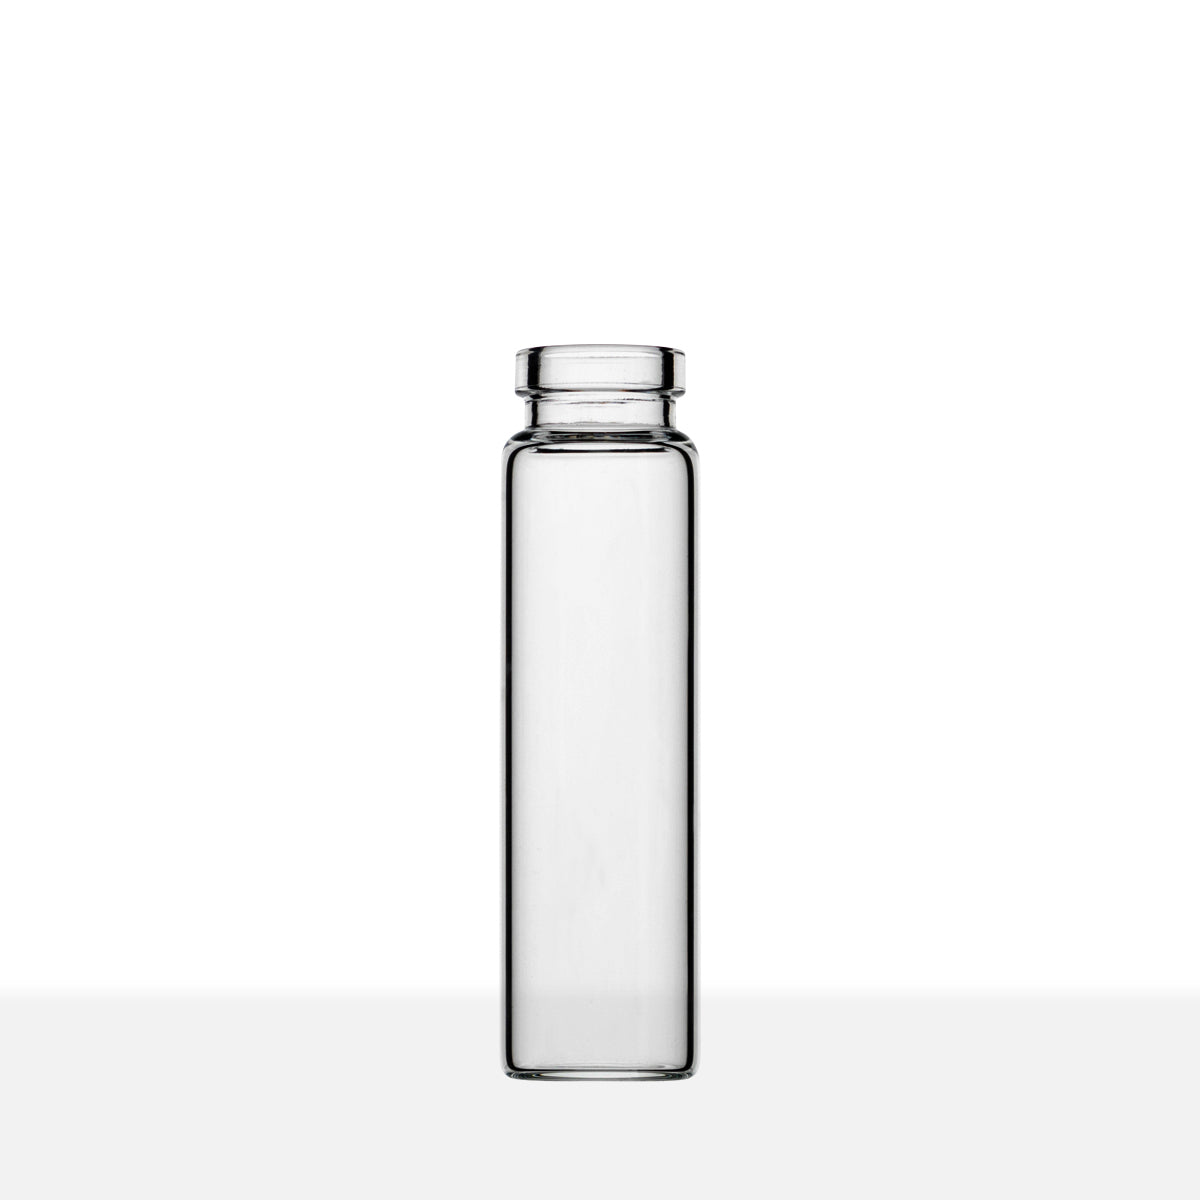 PATENT LIP GLASS VIALS - CLEAR Item #:VCPC1760